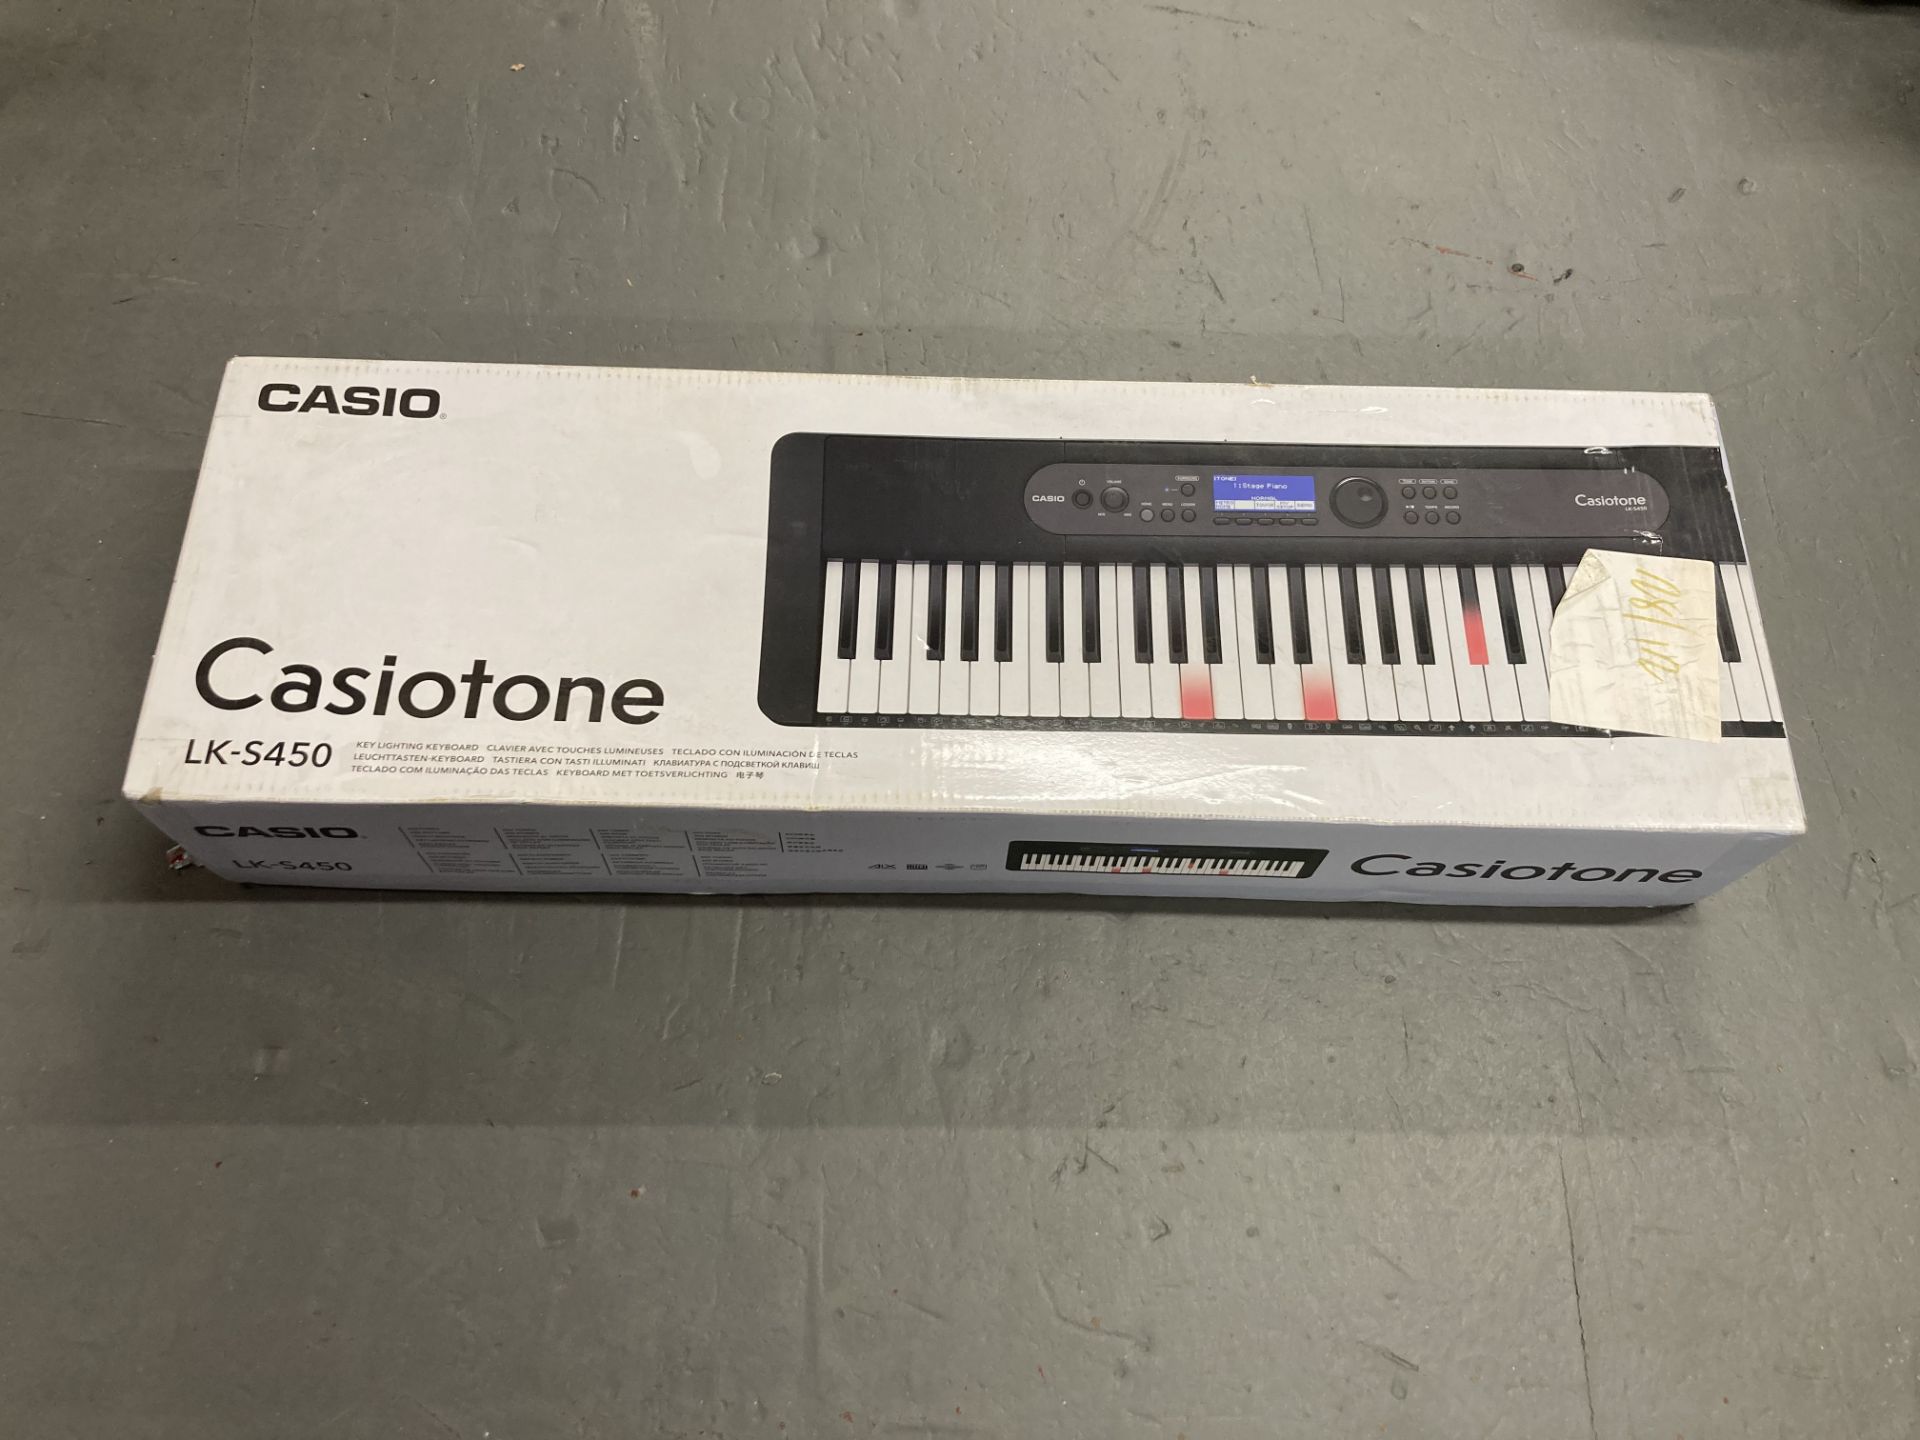 A Casiotone LK-S450 key lighted keyboard